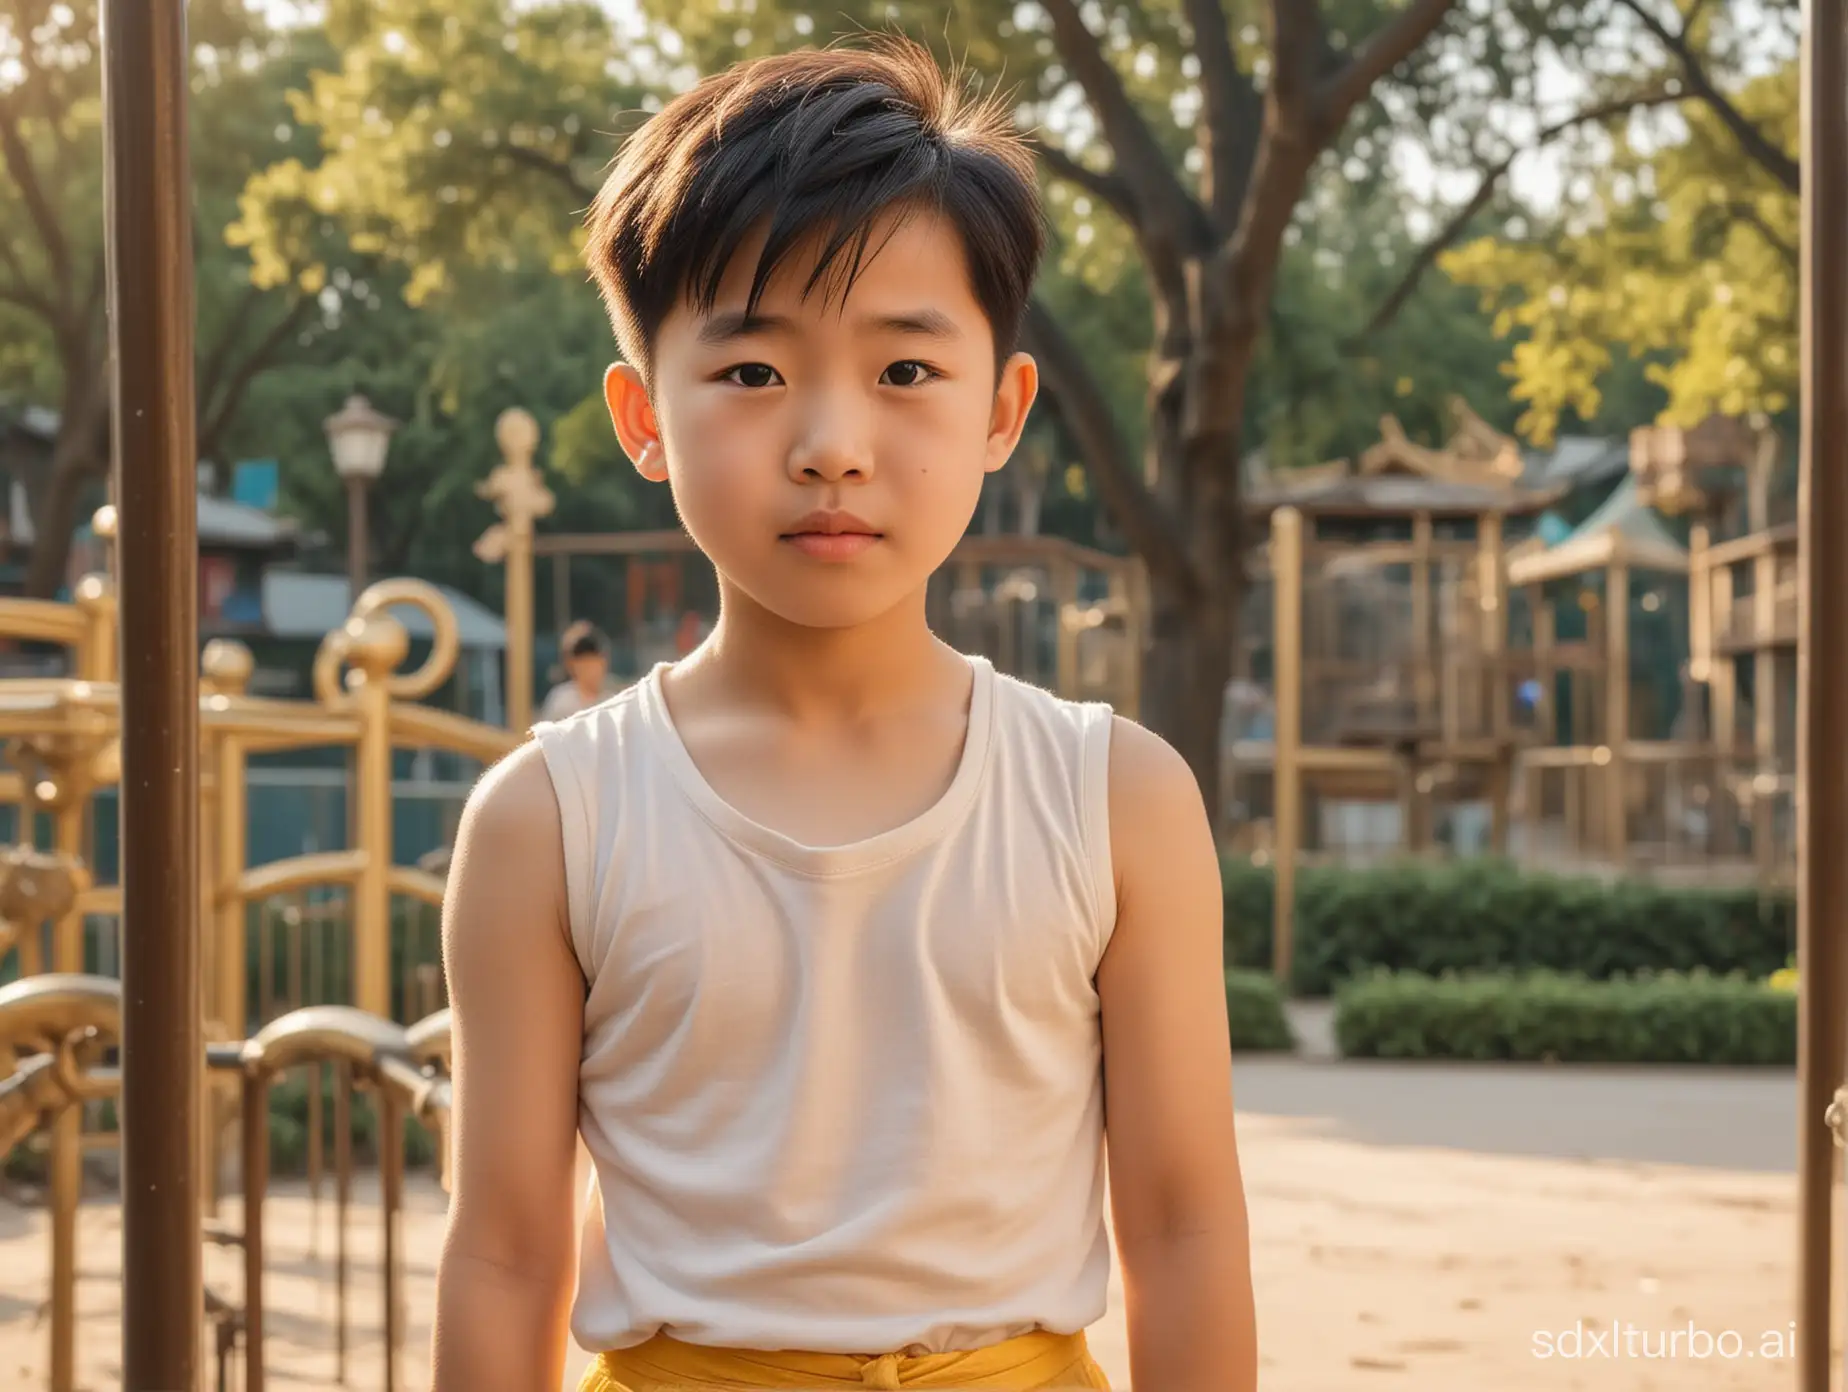 Brave-Chinese-Boy-Transforms-into-Golden-Disney-Princess